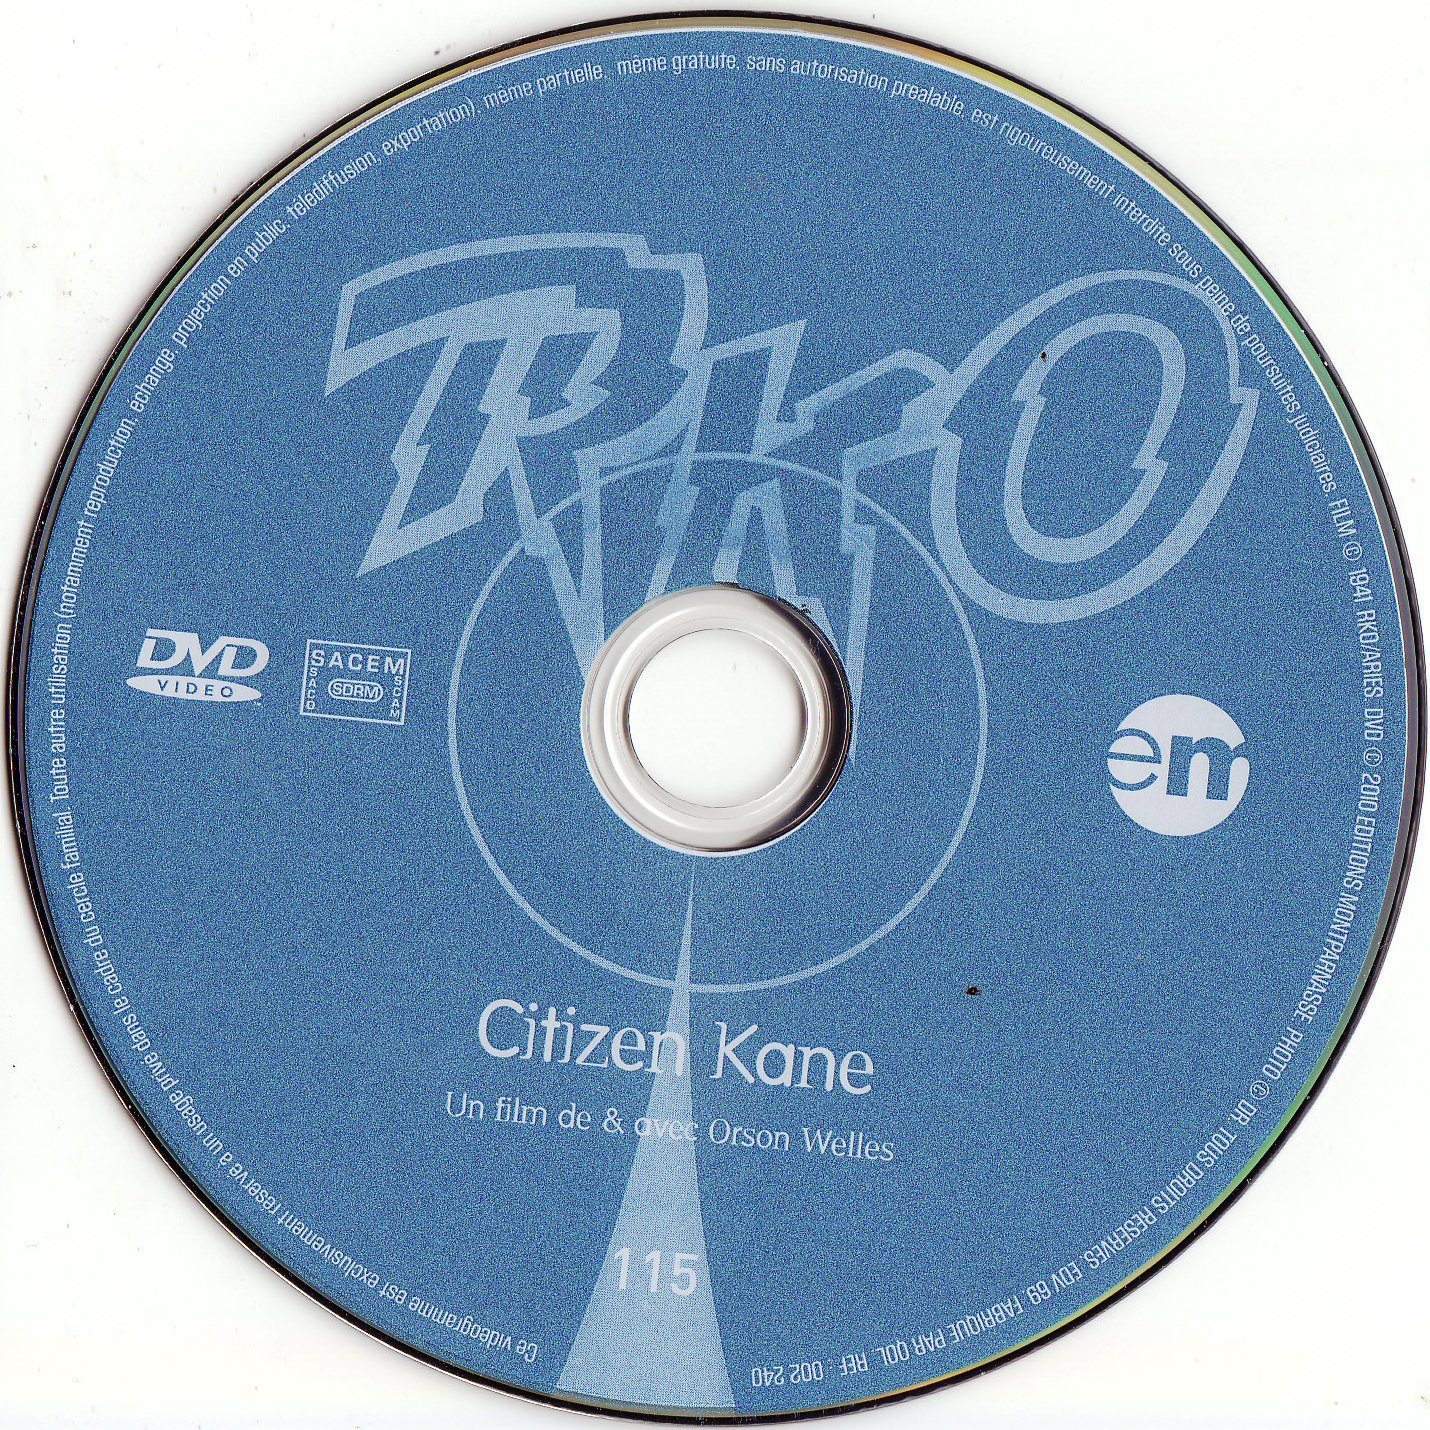 Citizen Kane v2